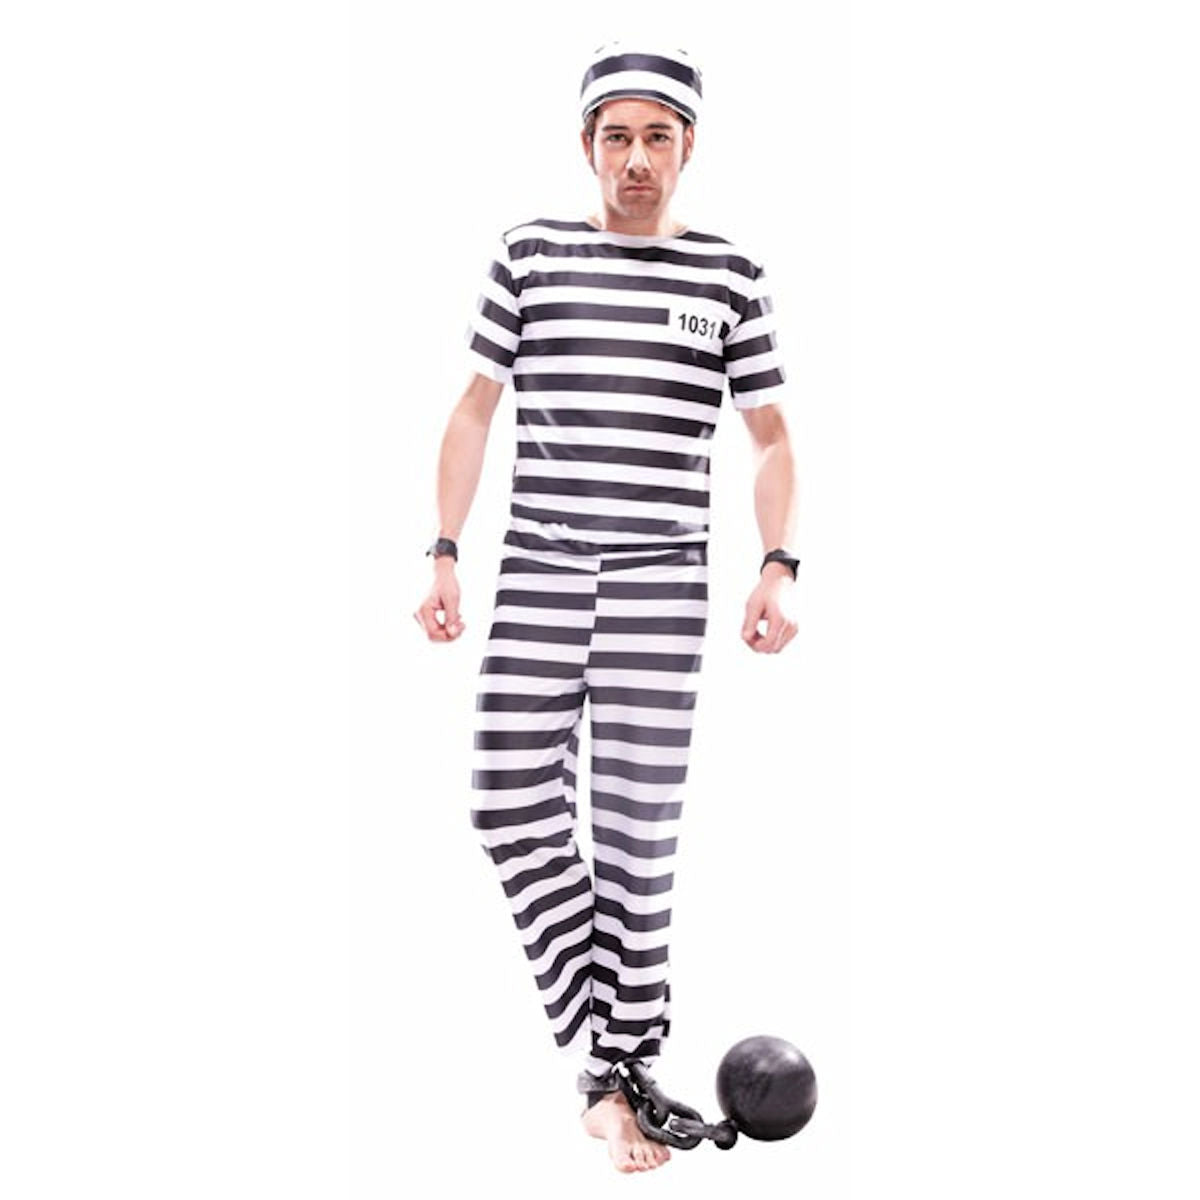 Prisoner Convict Jailbird Men's Fancy Dress Costume with free handcuffs